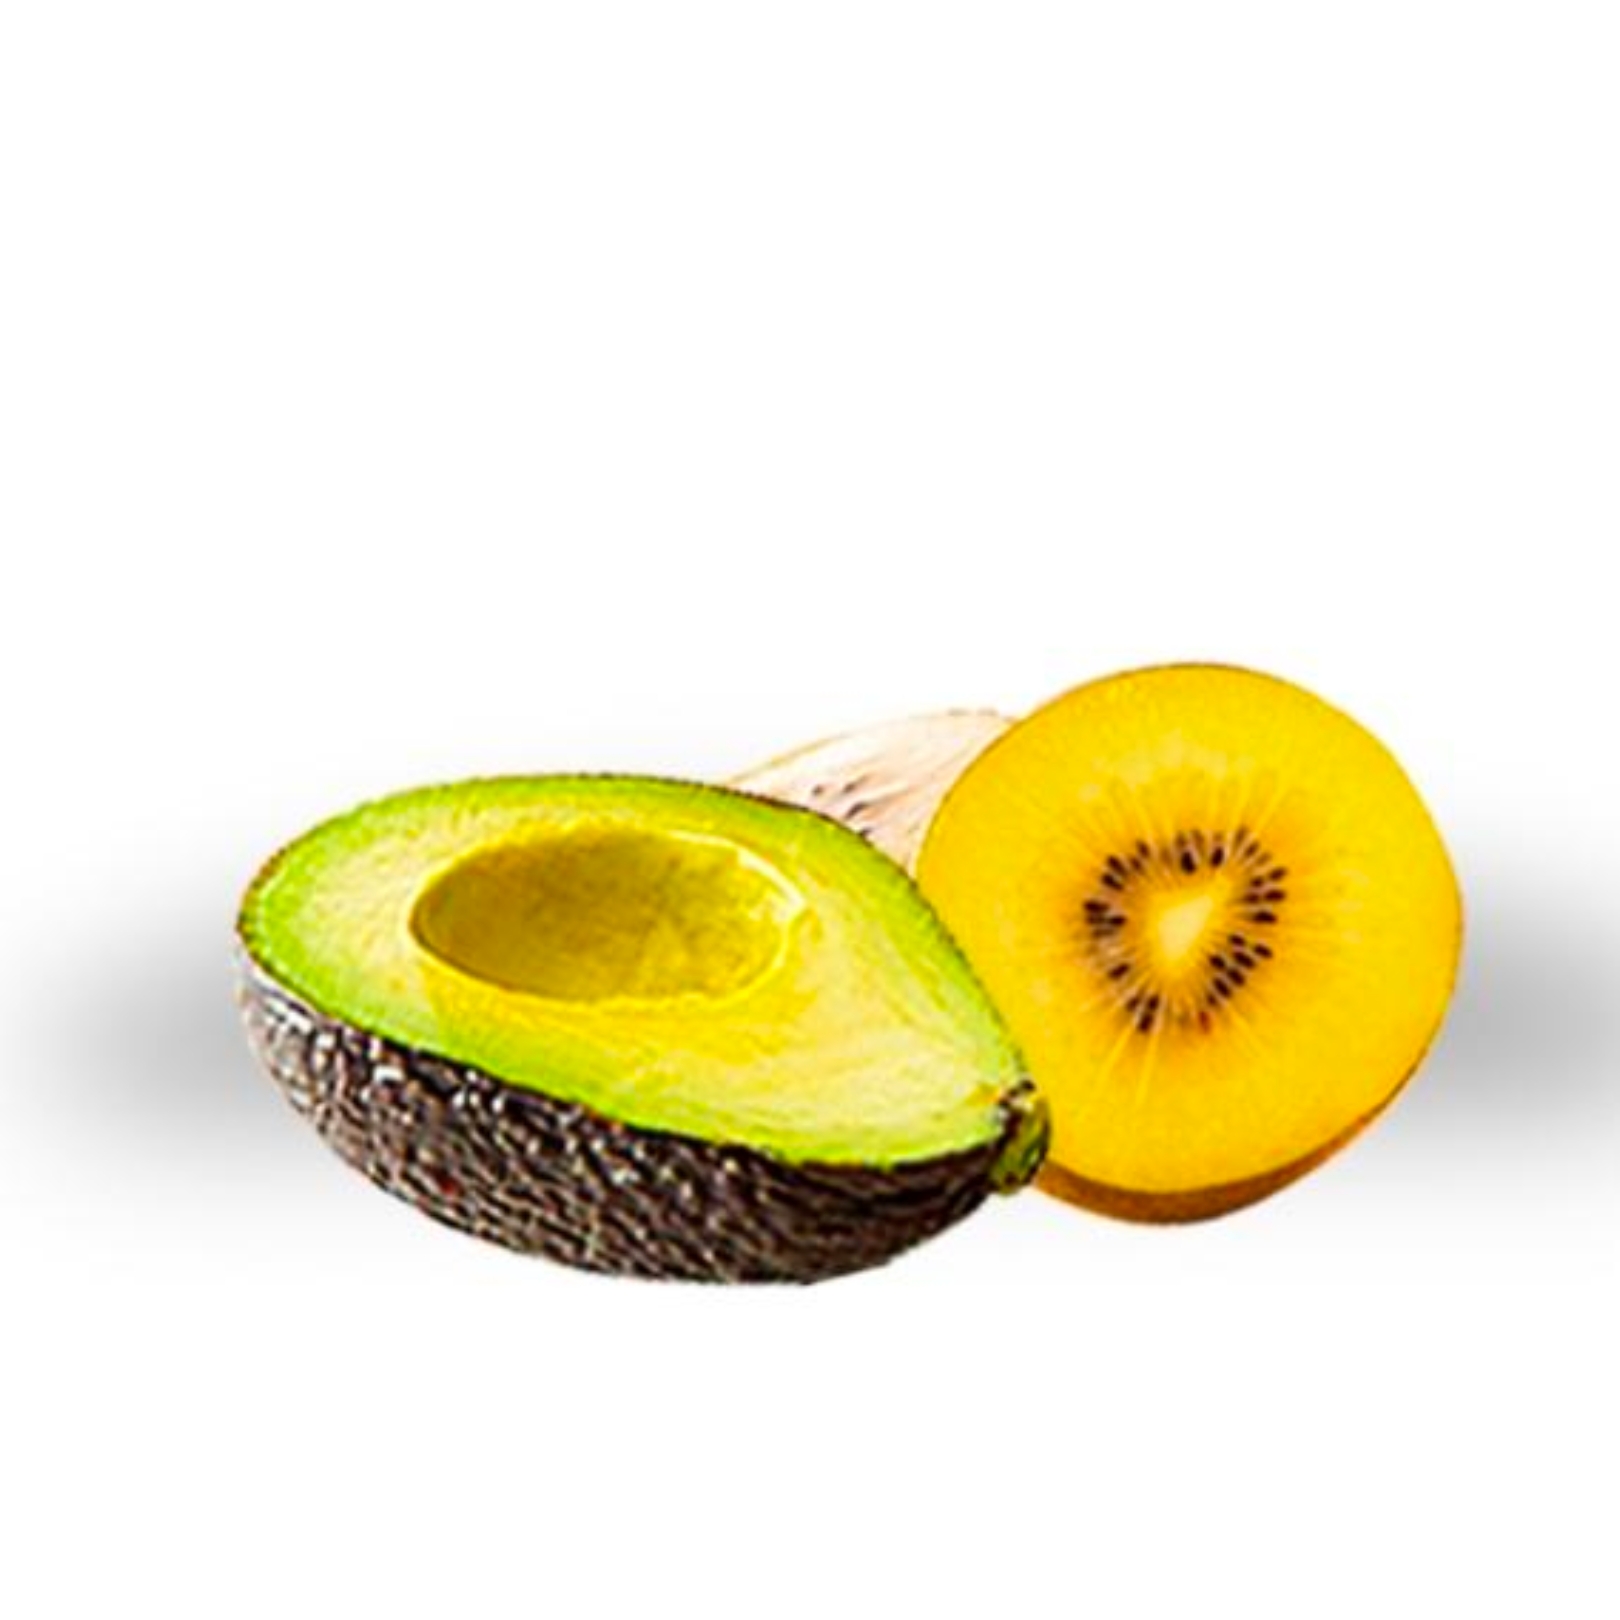 Buy Kiwifruit Avocado Online NZ